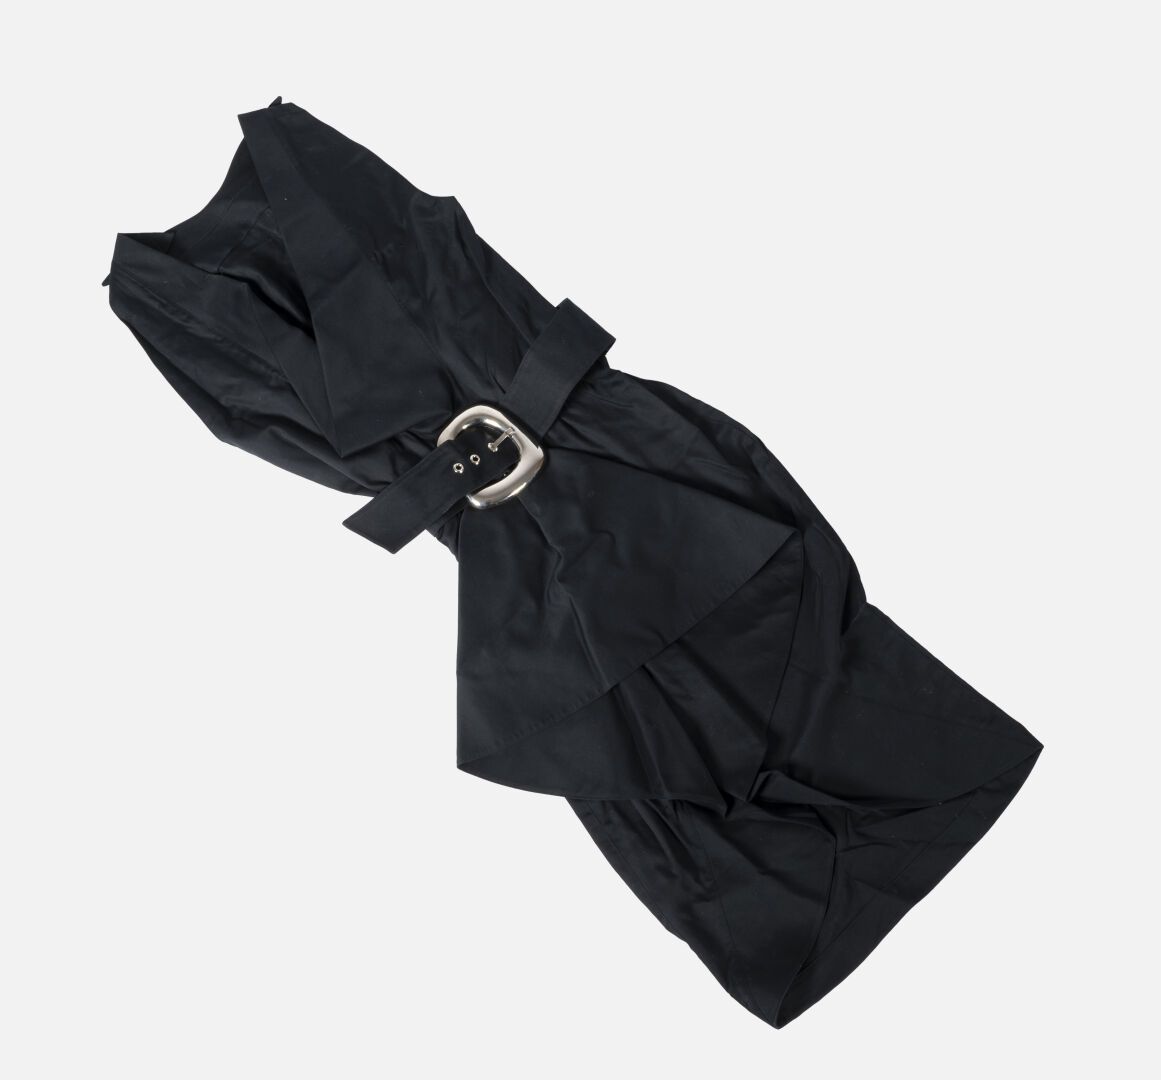 Thierry MUGLER 黑色长袖连衣裙，尺寸为38号，还有一条带状连衣裙，尺寸为36号